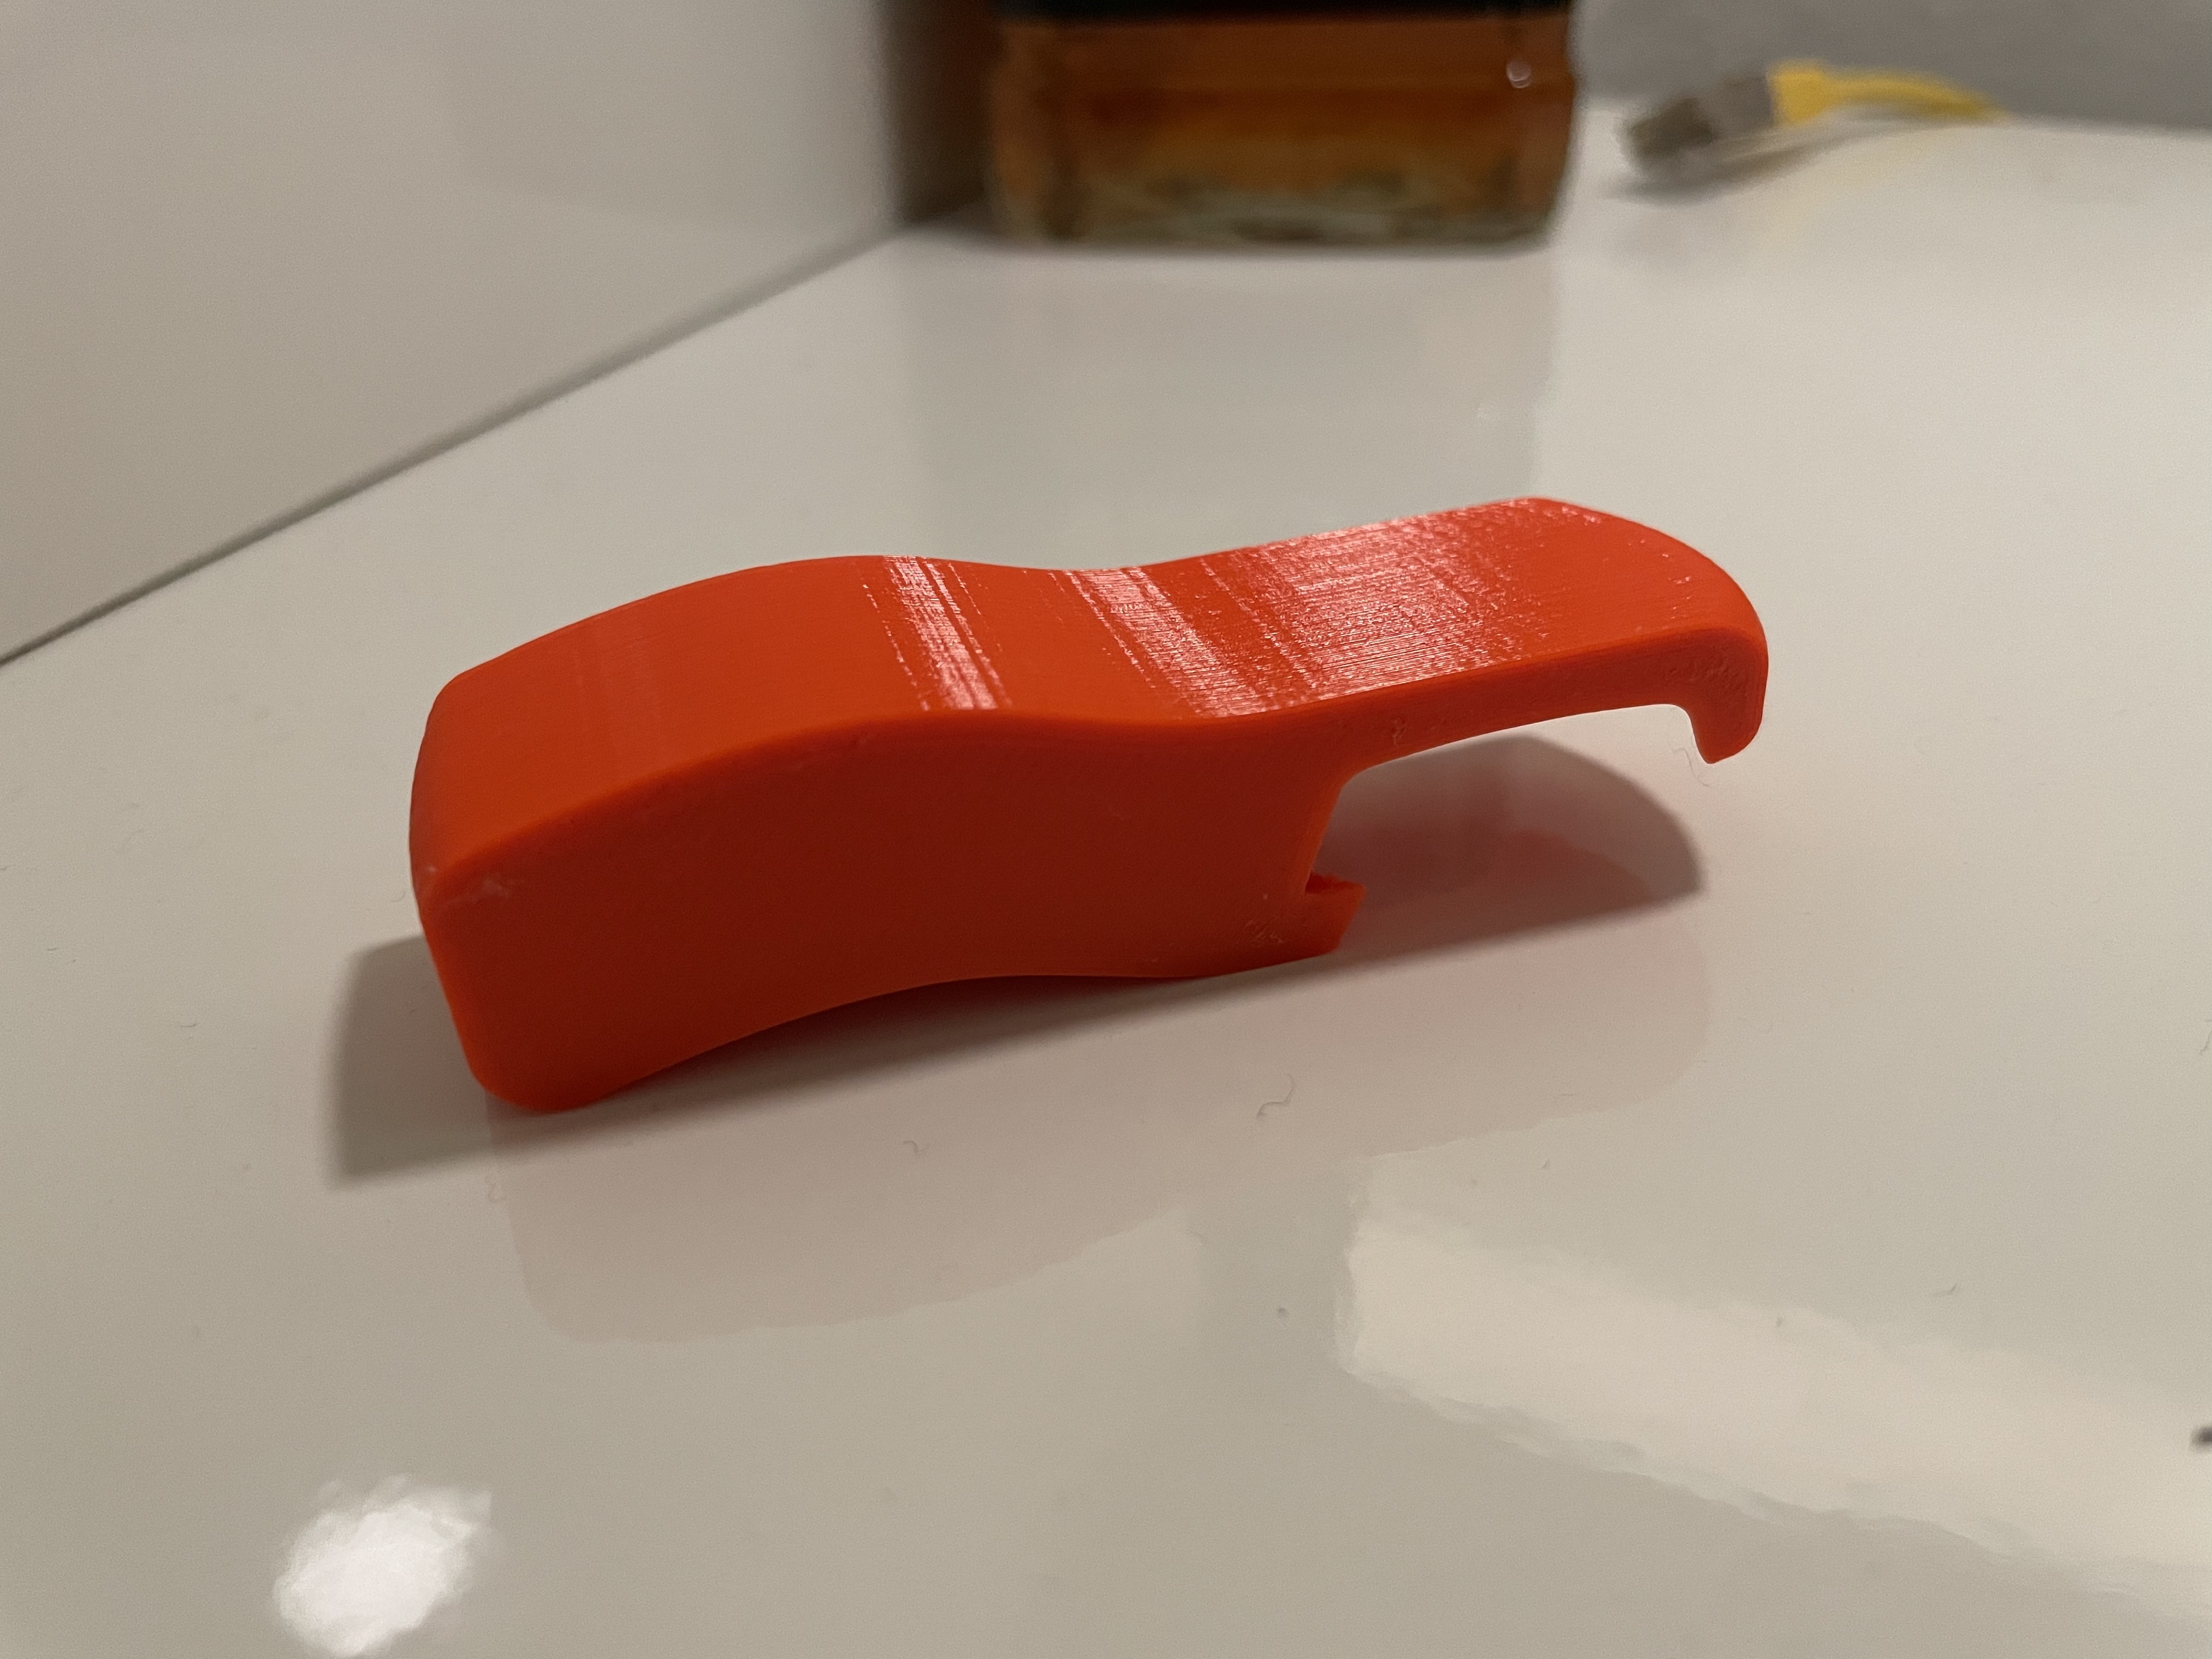 Completely printed bottle opener